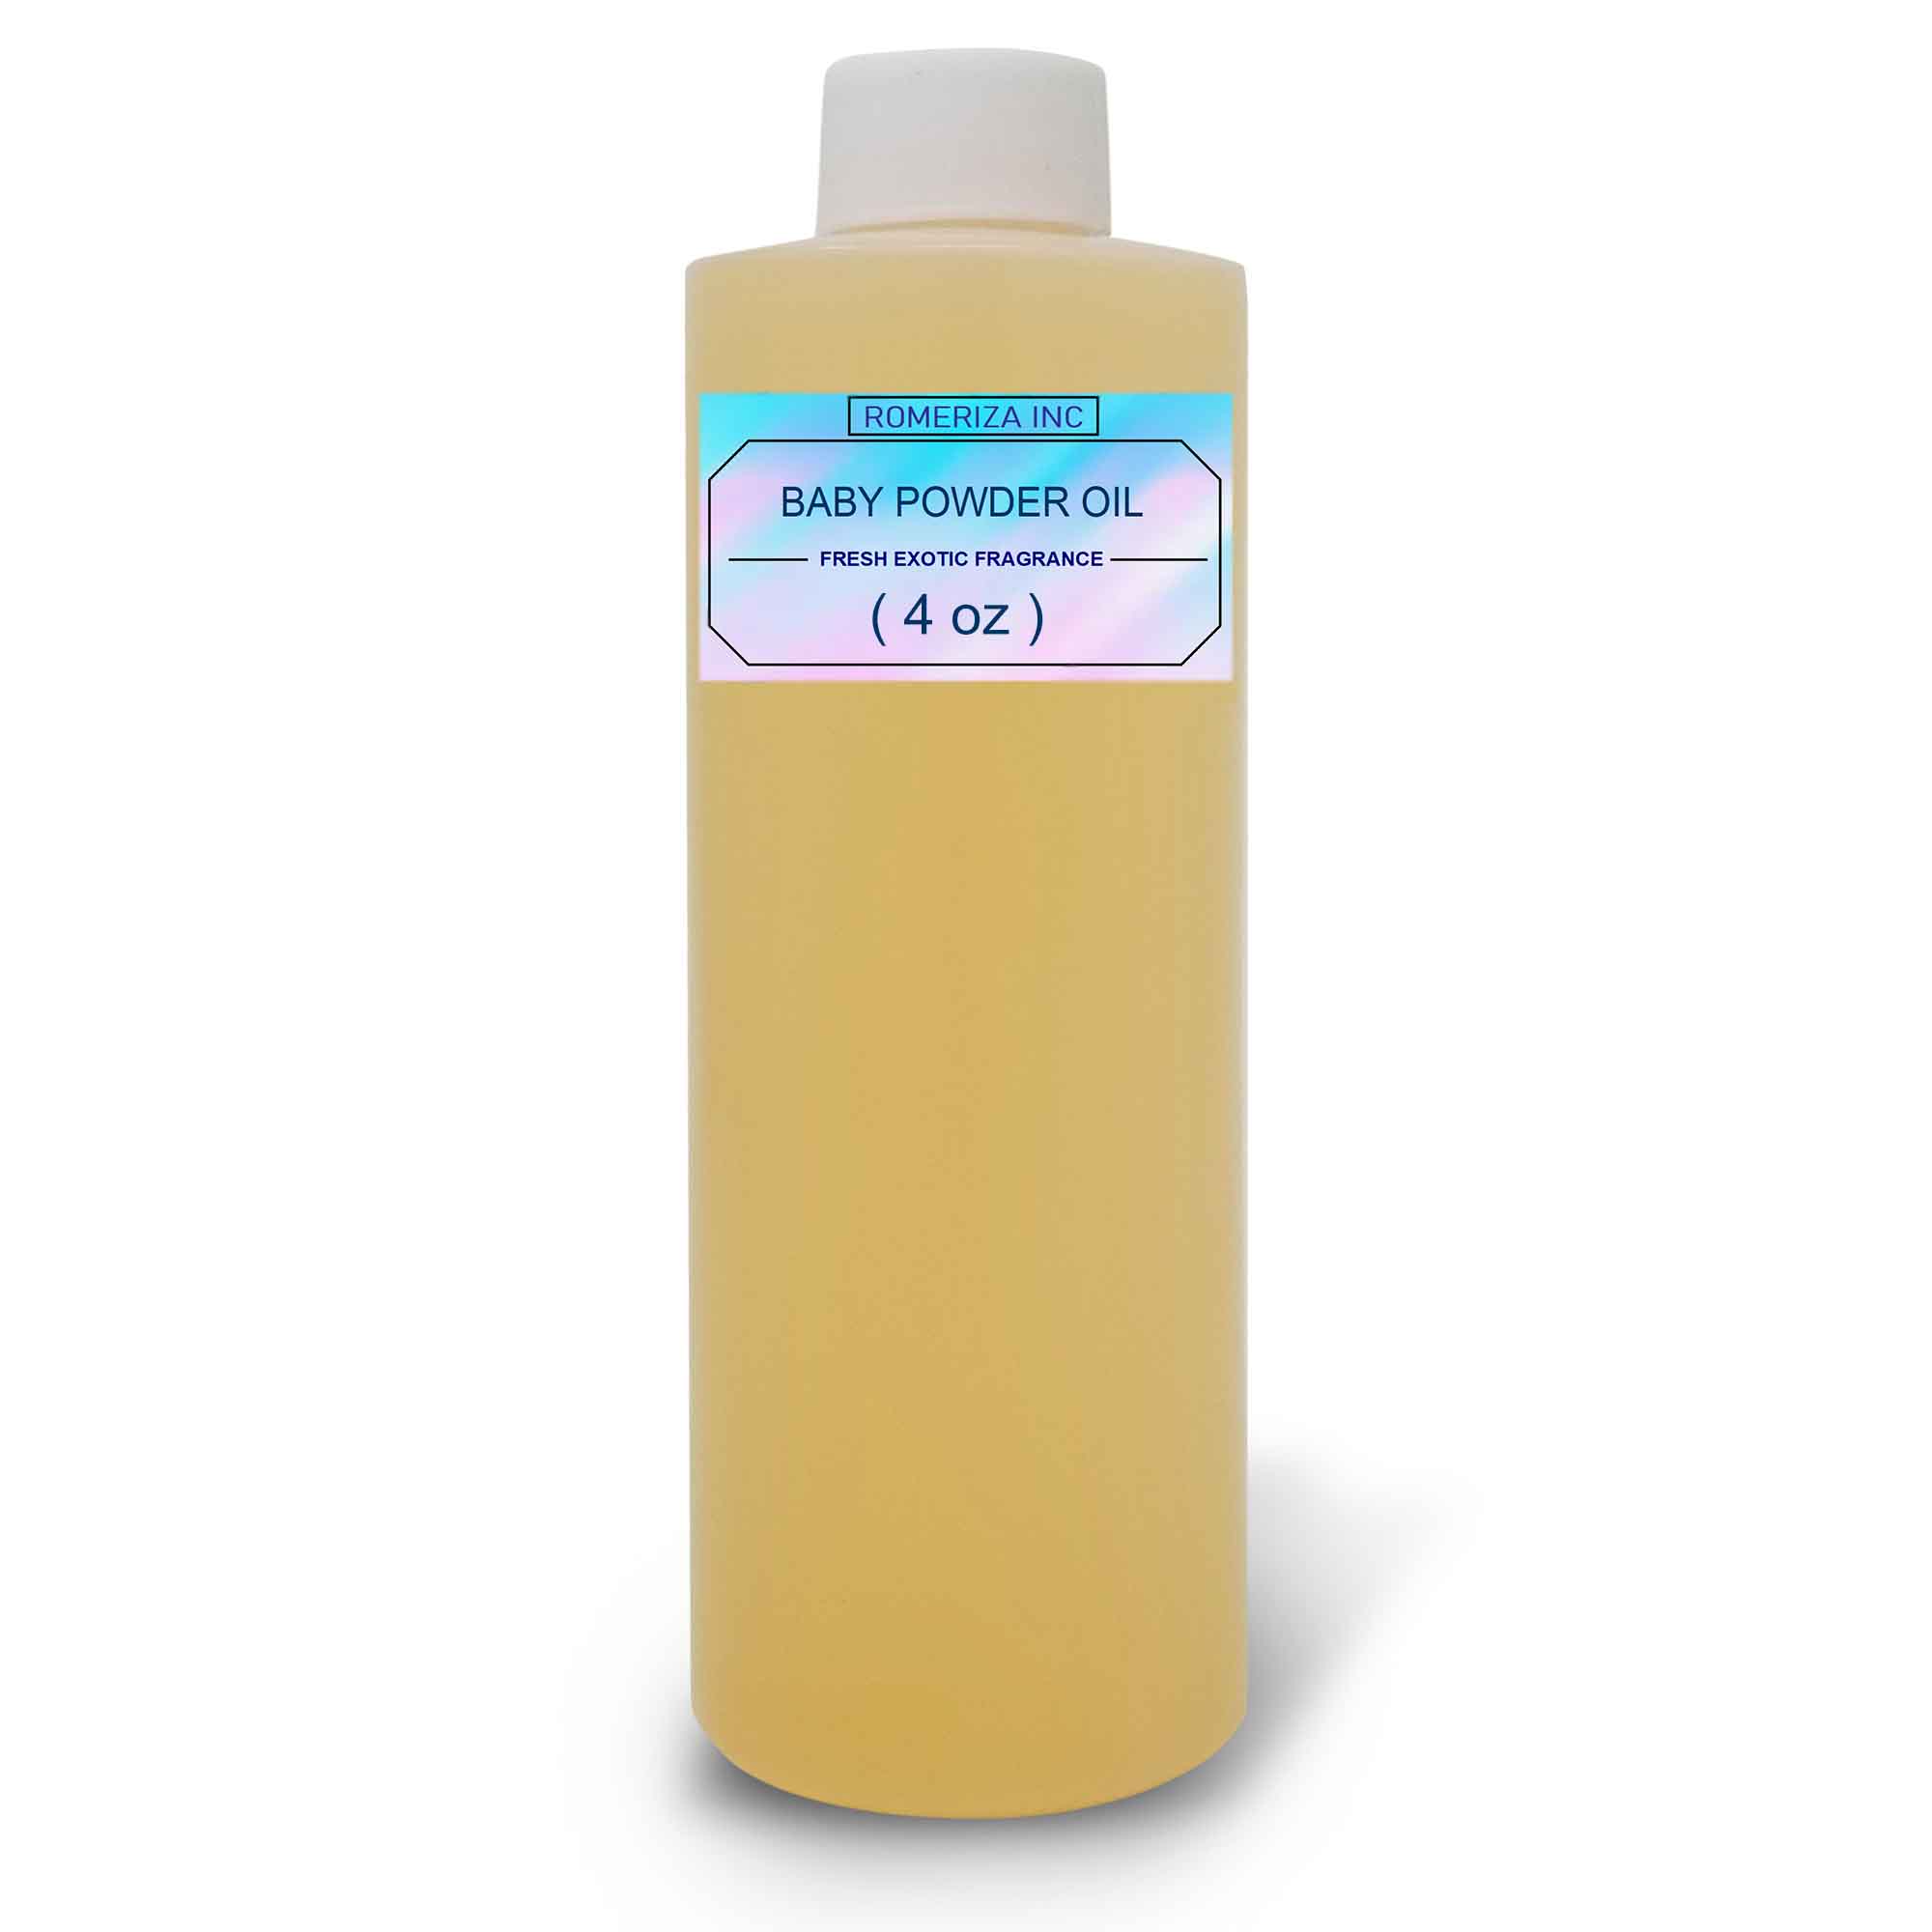 Romeriza inc Baby Powder Fragrance Oil - Gentle Powder Oil Perfect for